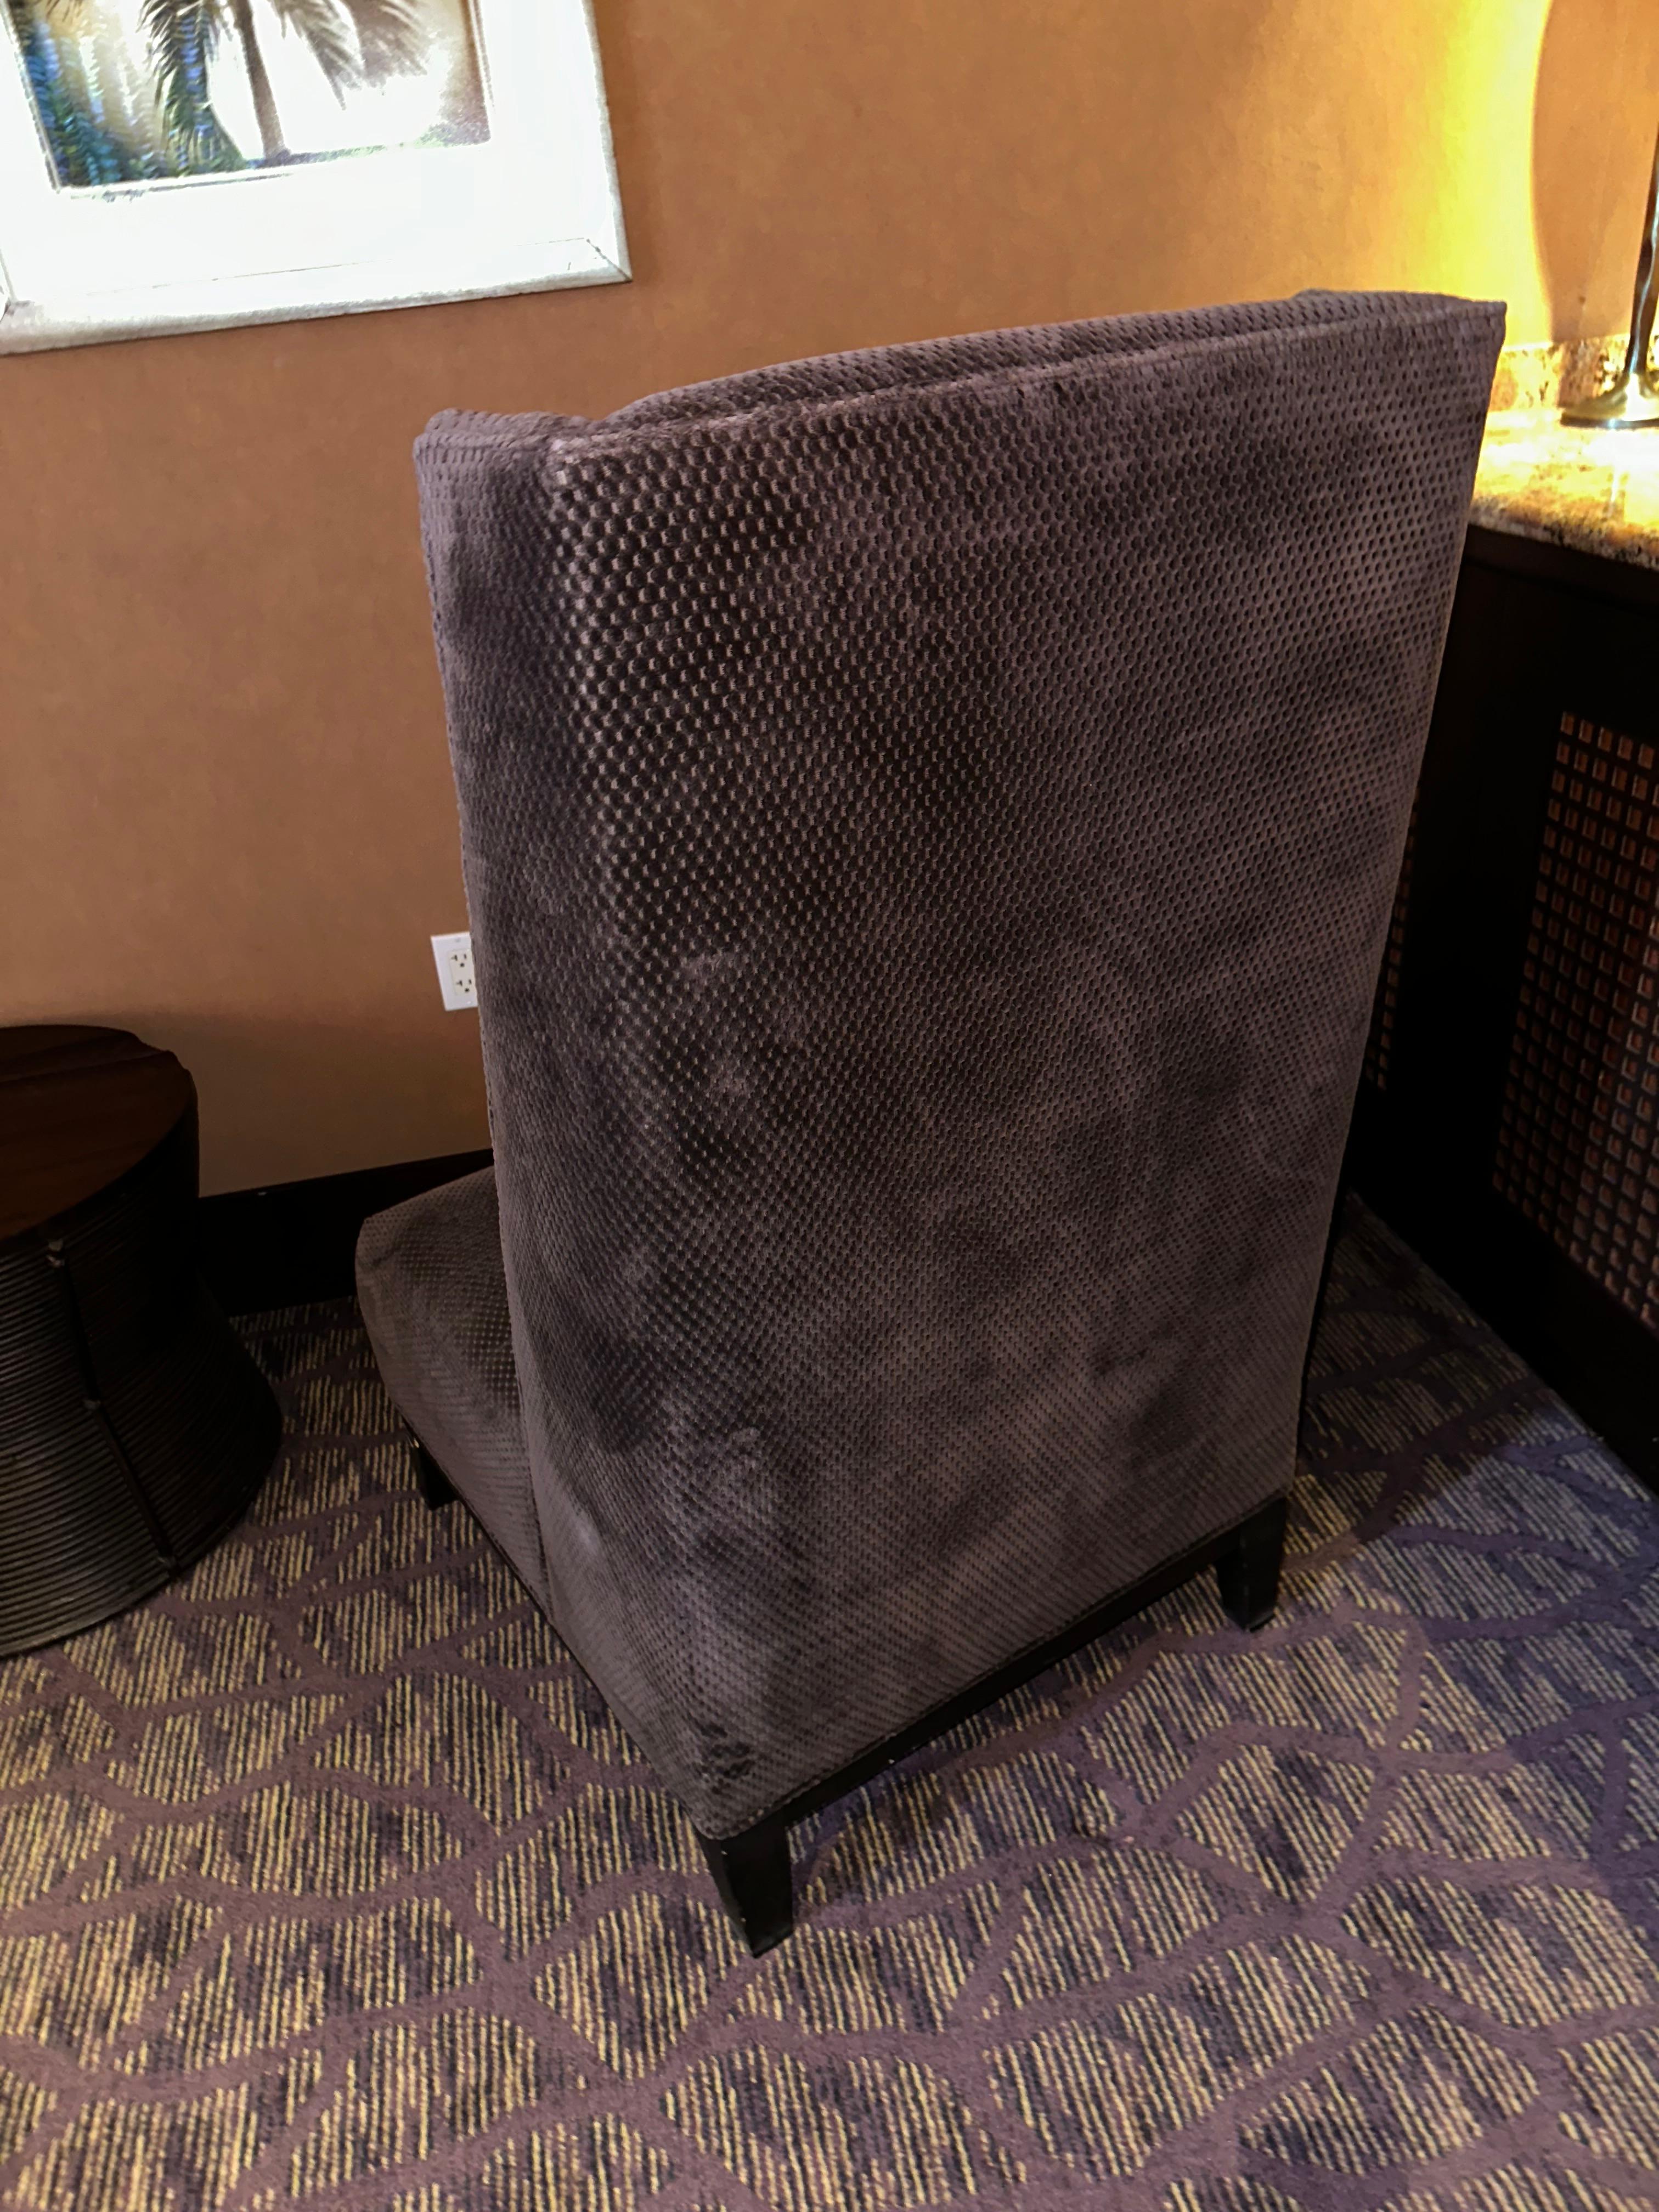 30"W x 30"D x 51"H Purple Fabric High Back Chair